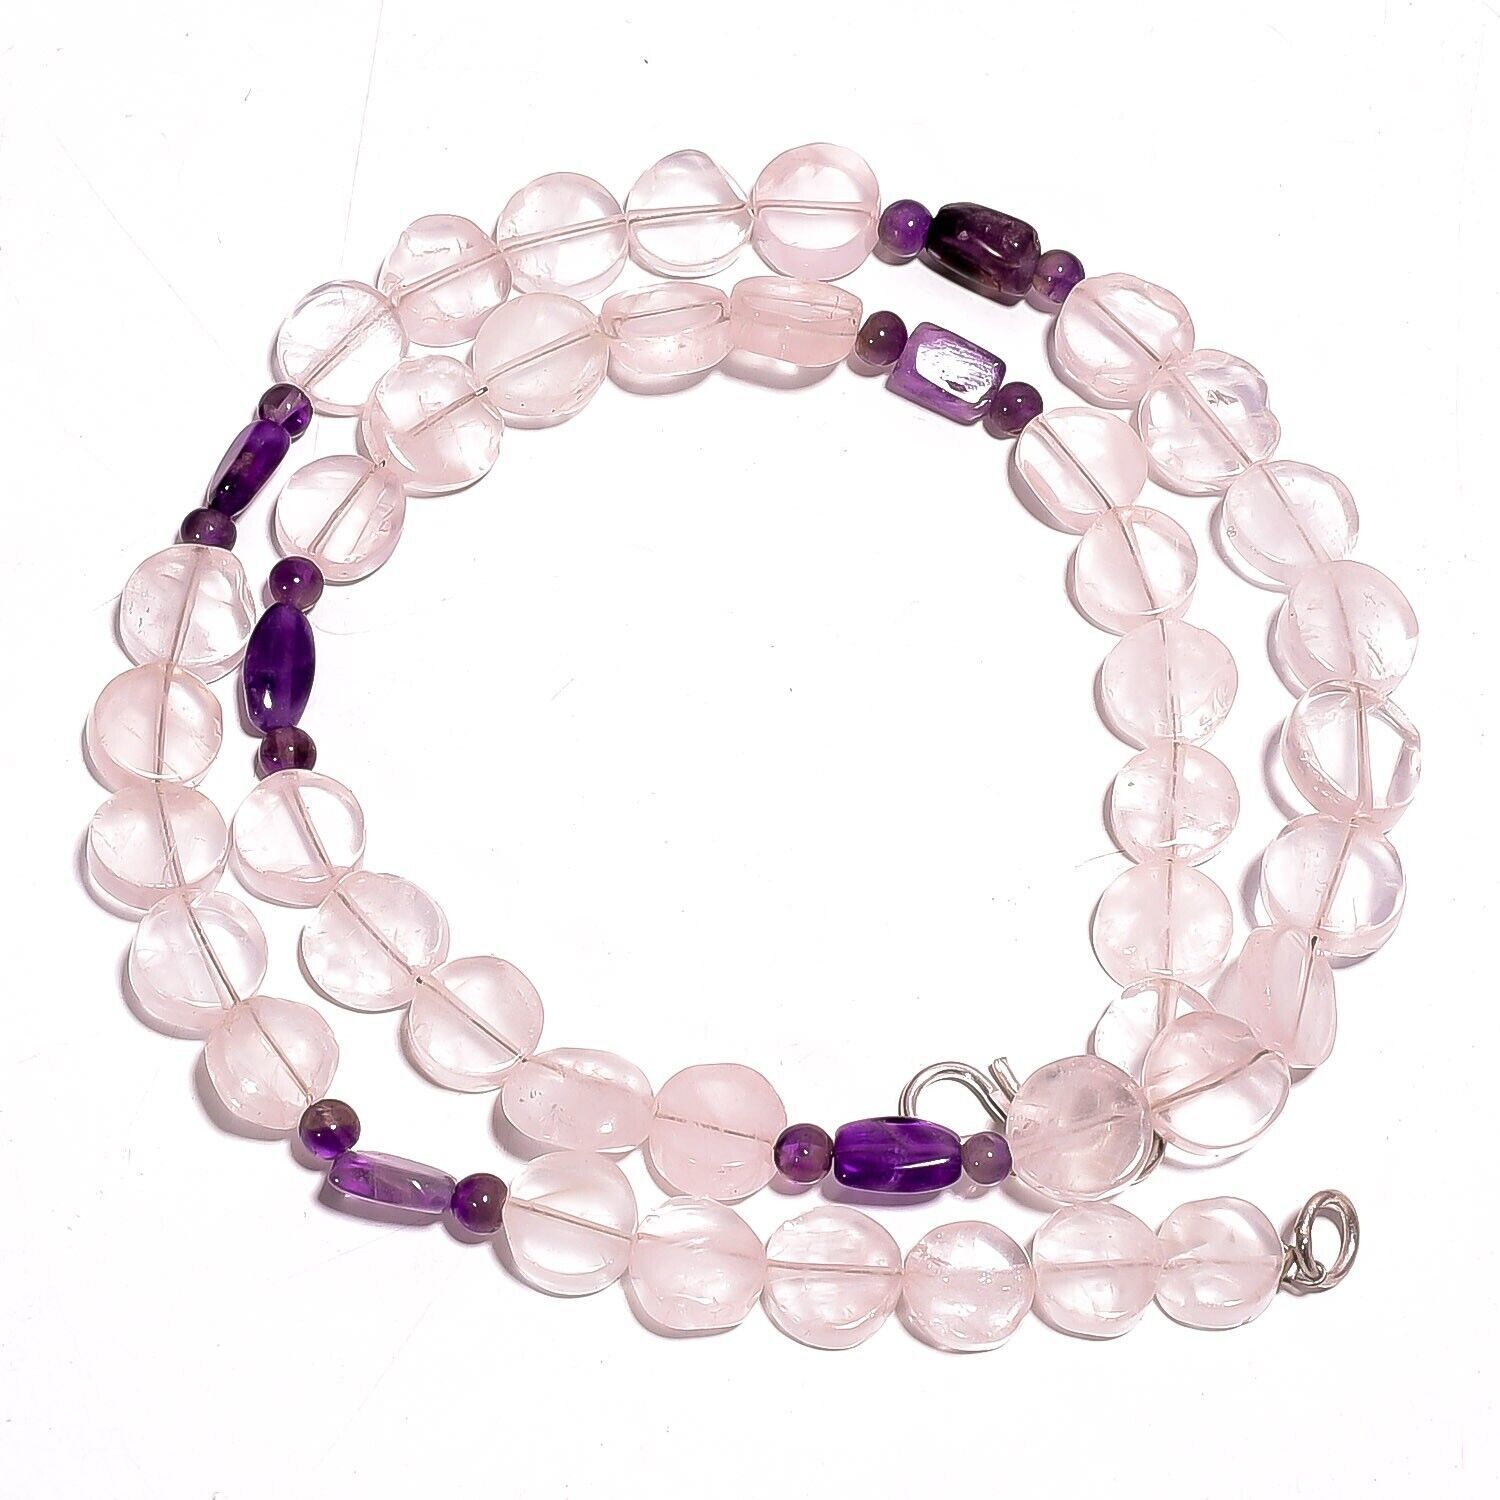 Primary image for Natural Rose Quartz Amethyst Gemstone Mix Shape Smooth Beads Necklace 17" UB3080